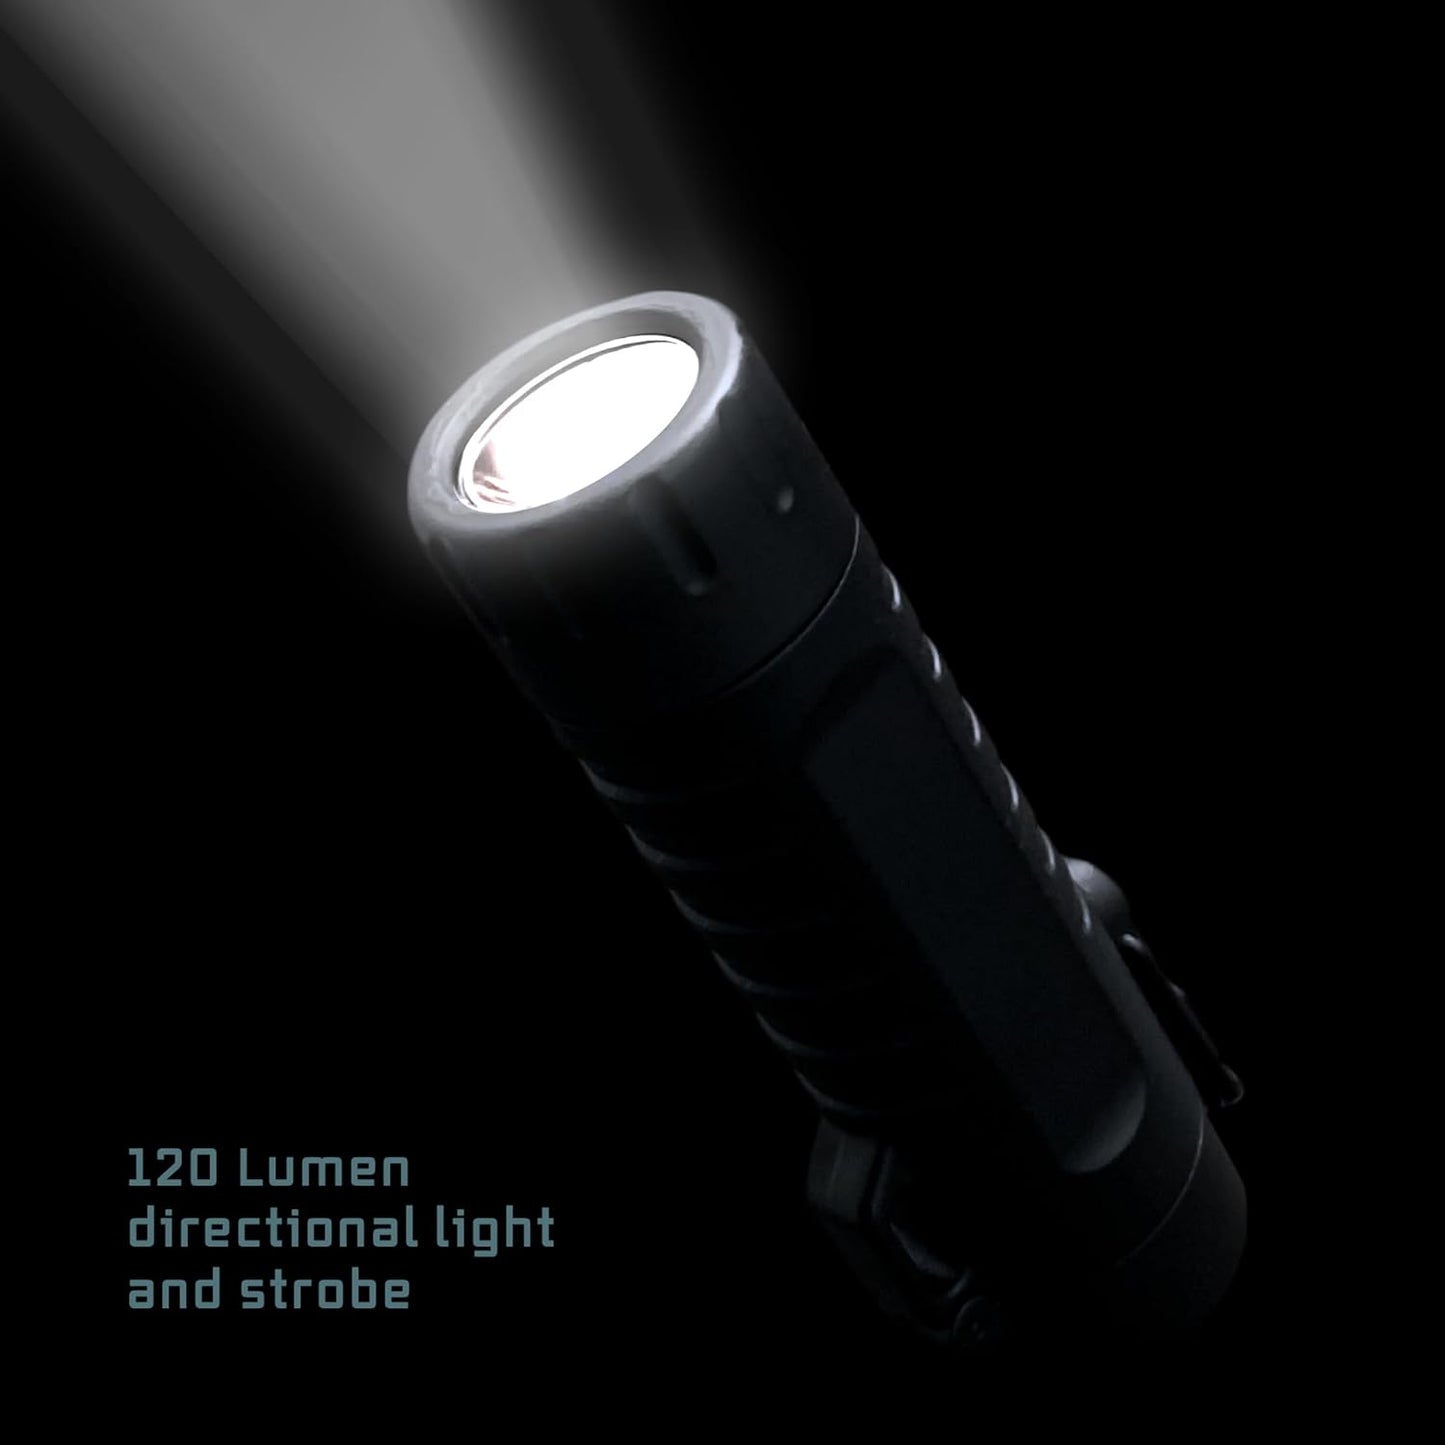 Plasma Lighter - Rechargeable Mini Flashlight - Camping Essentials